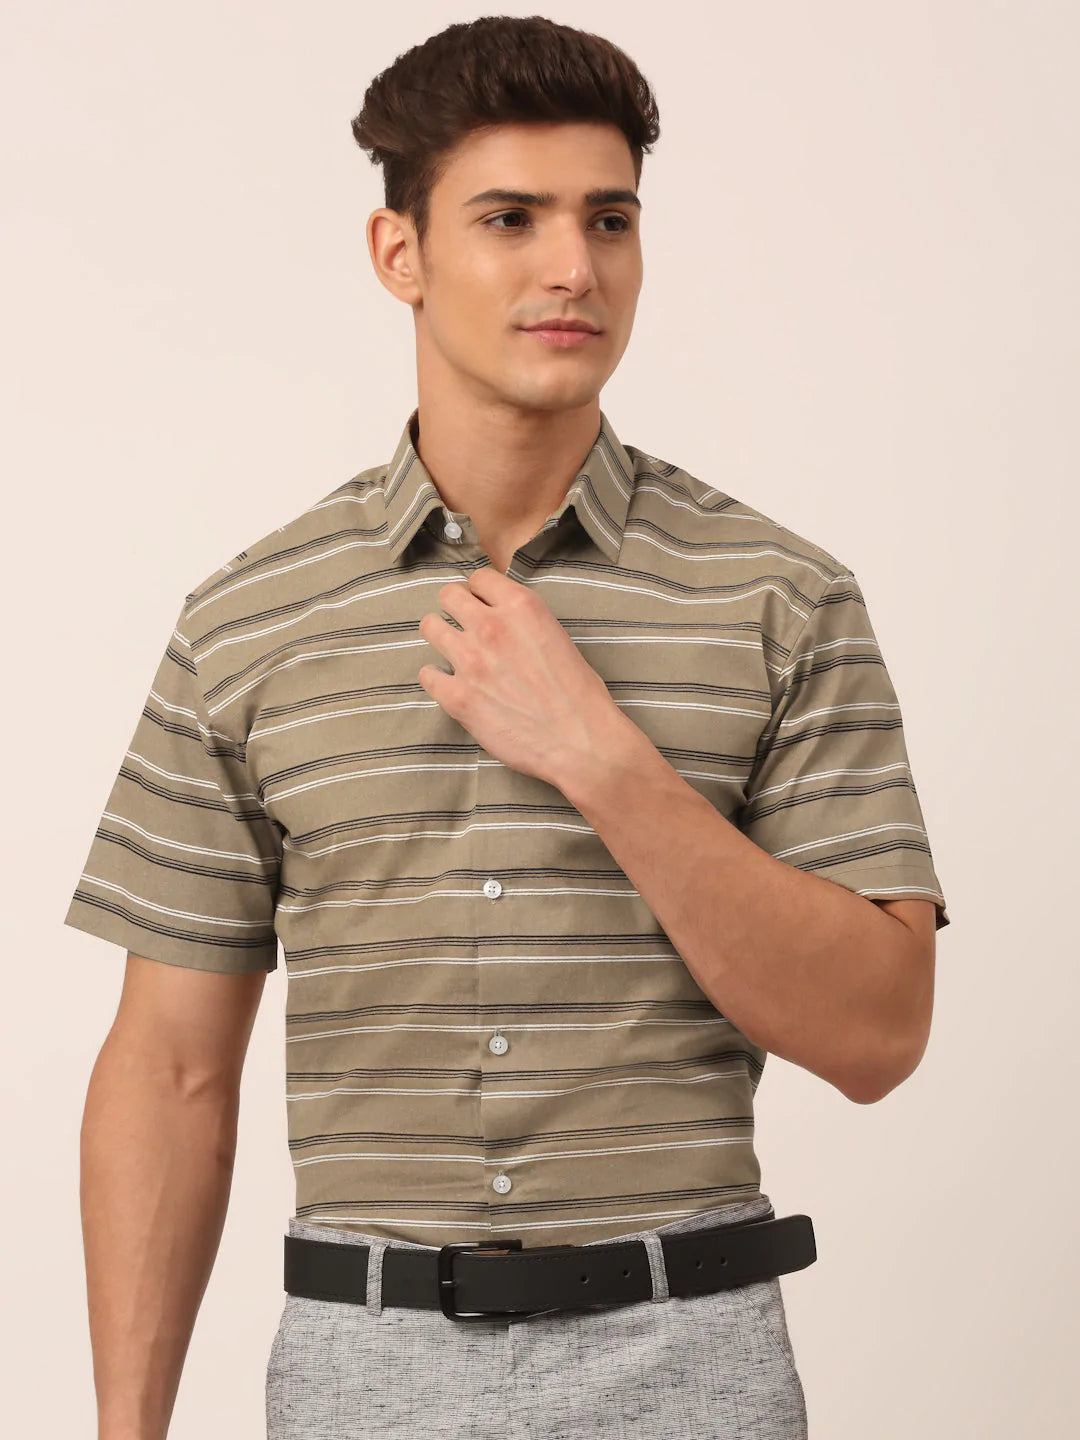 Jainish Men's Cotton Striped Half Sleeve Formal Shirts ( SF 816Brown )